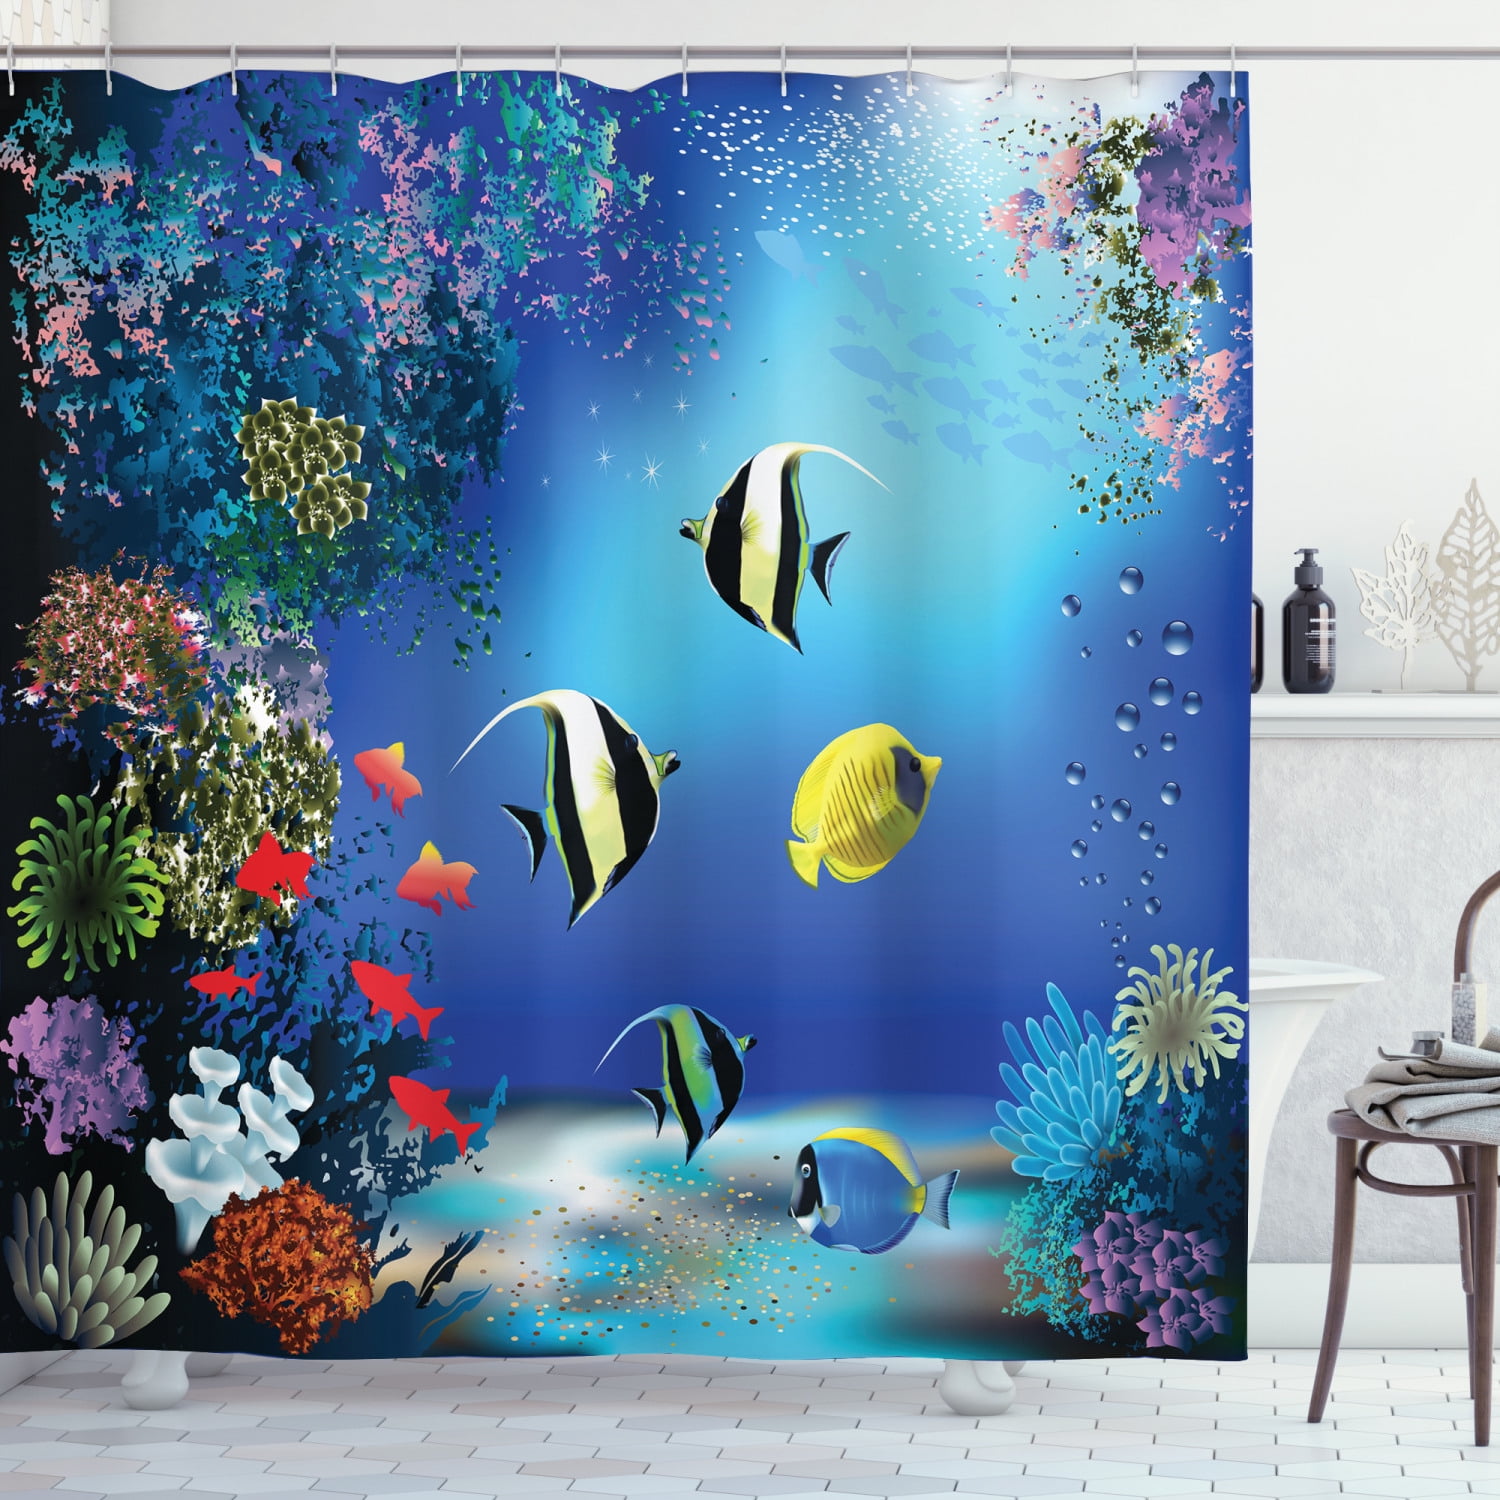 Underwater World Cartoon Fish Bathroom Fabric Shower Curtain Set w/ Free Hooks 